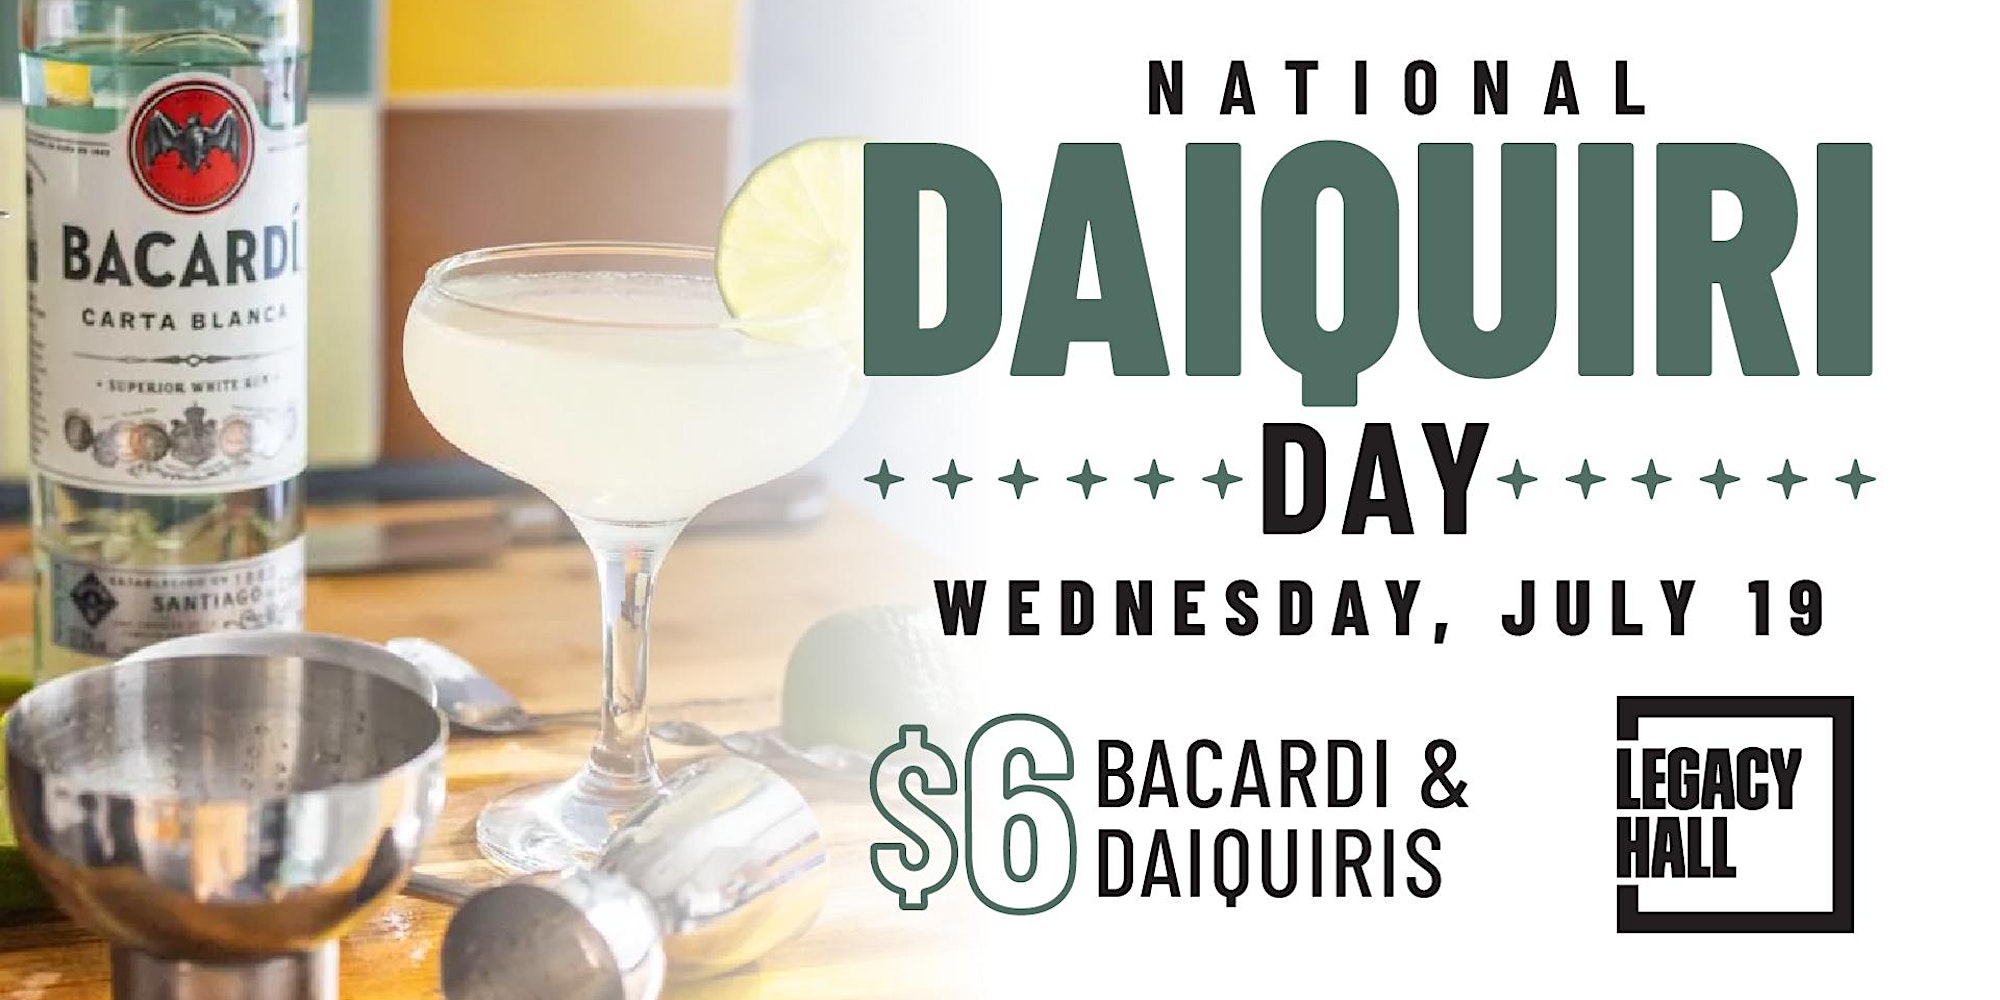 National Daiquiri Day